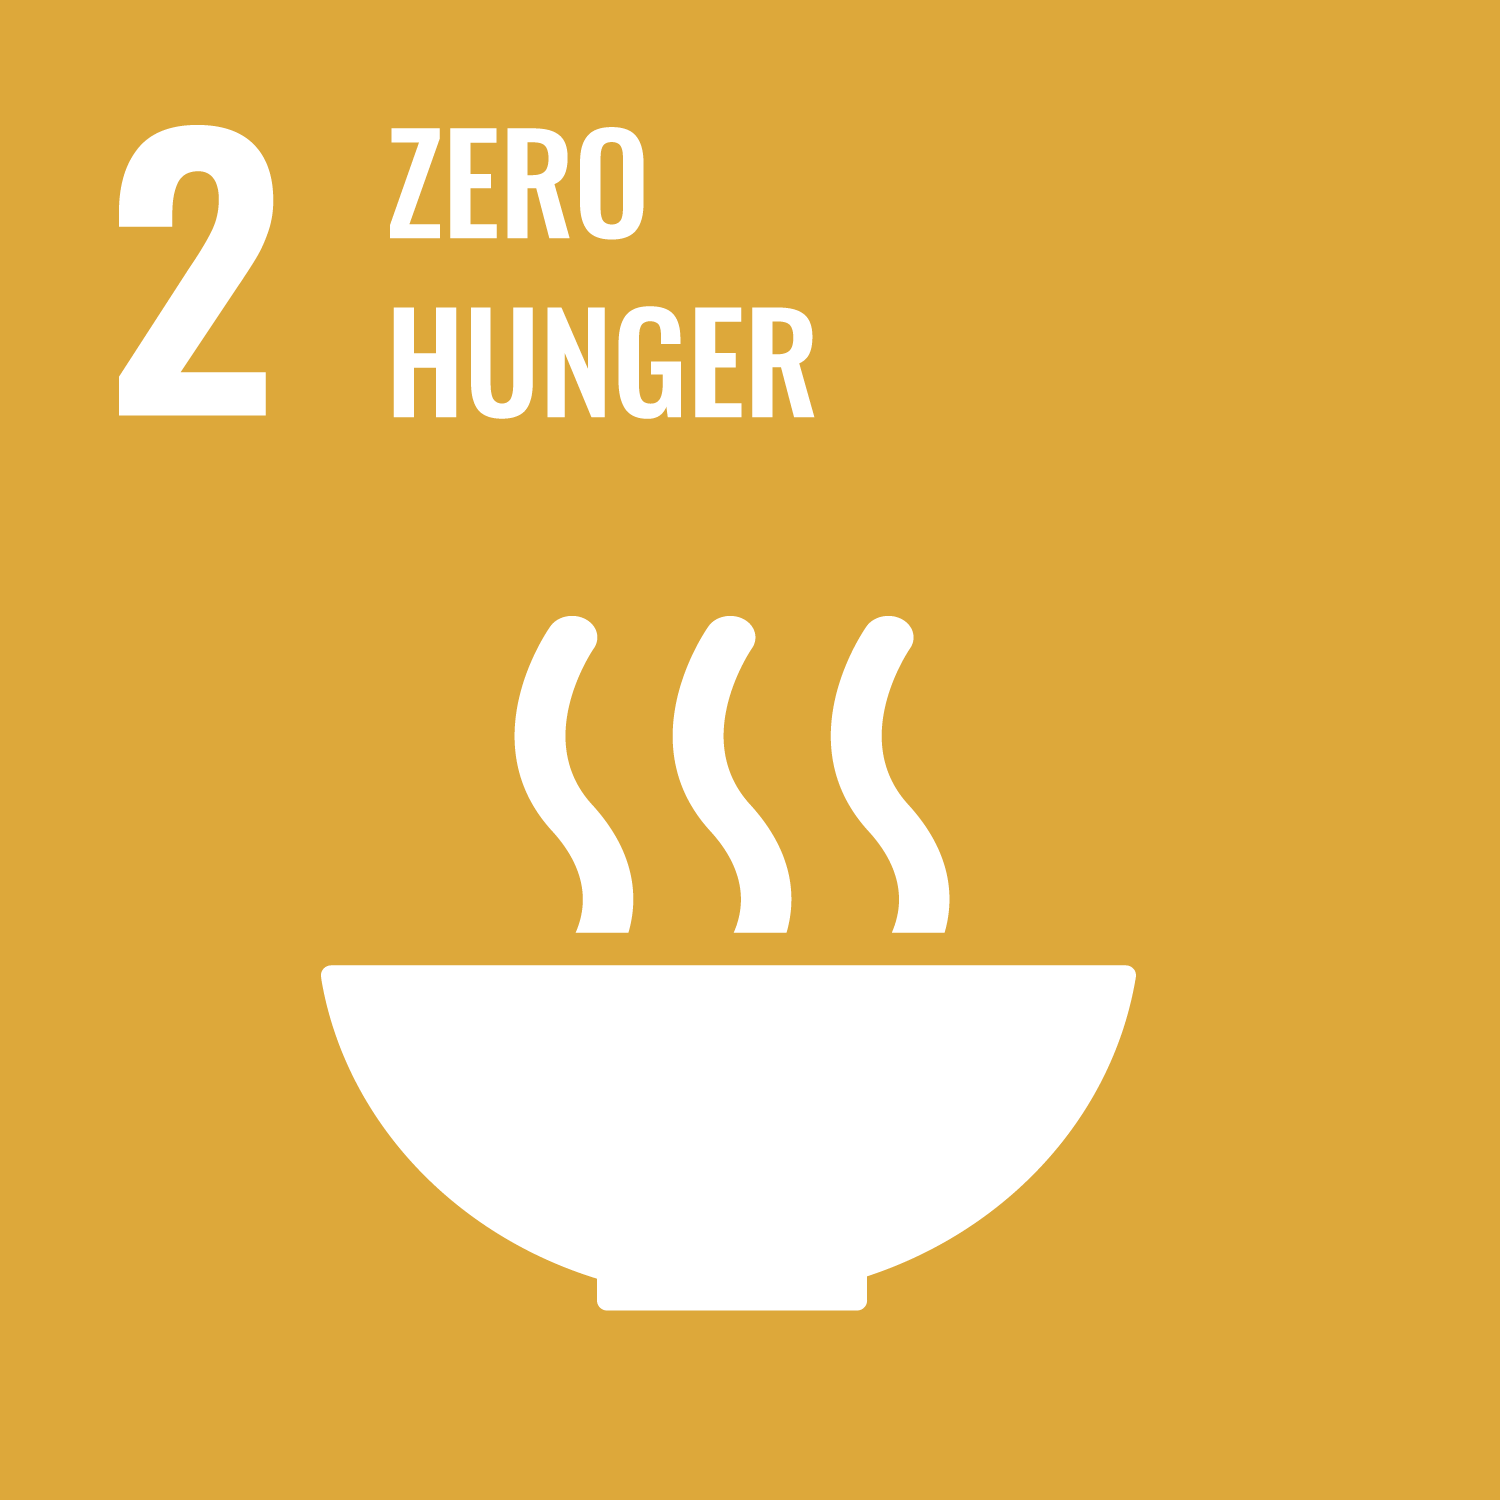 United Nations Sustainable Development Goal Number 2: Zero Hunger